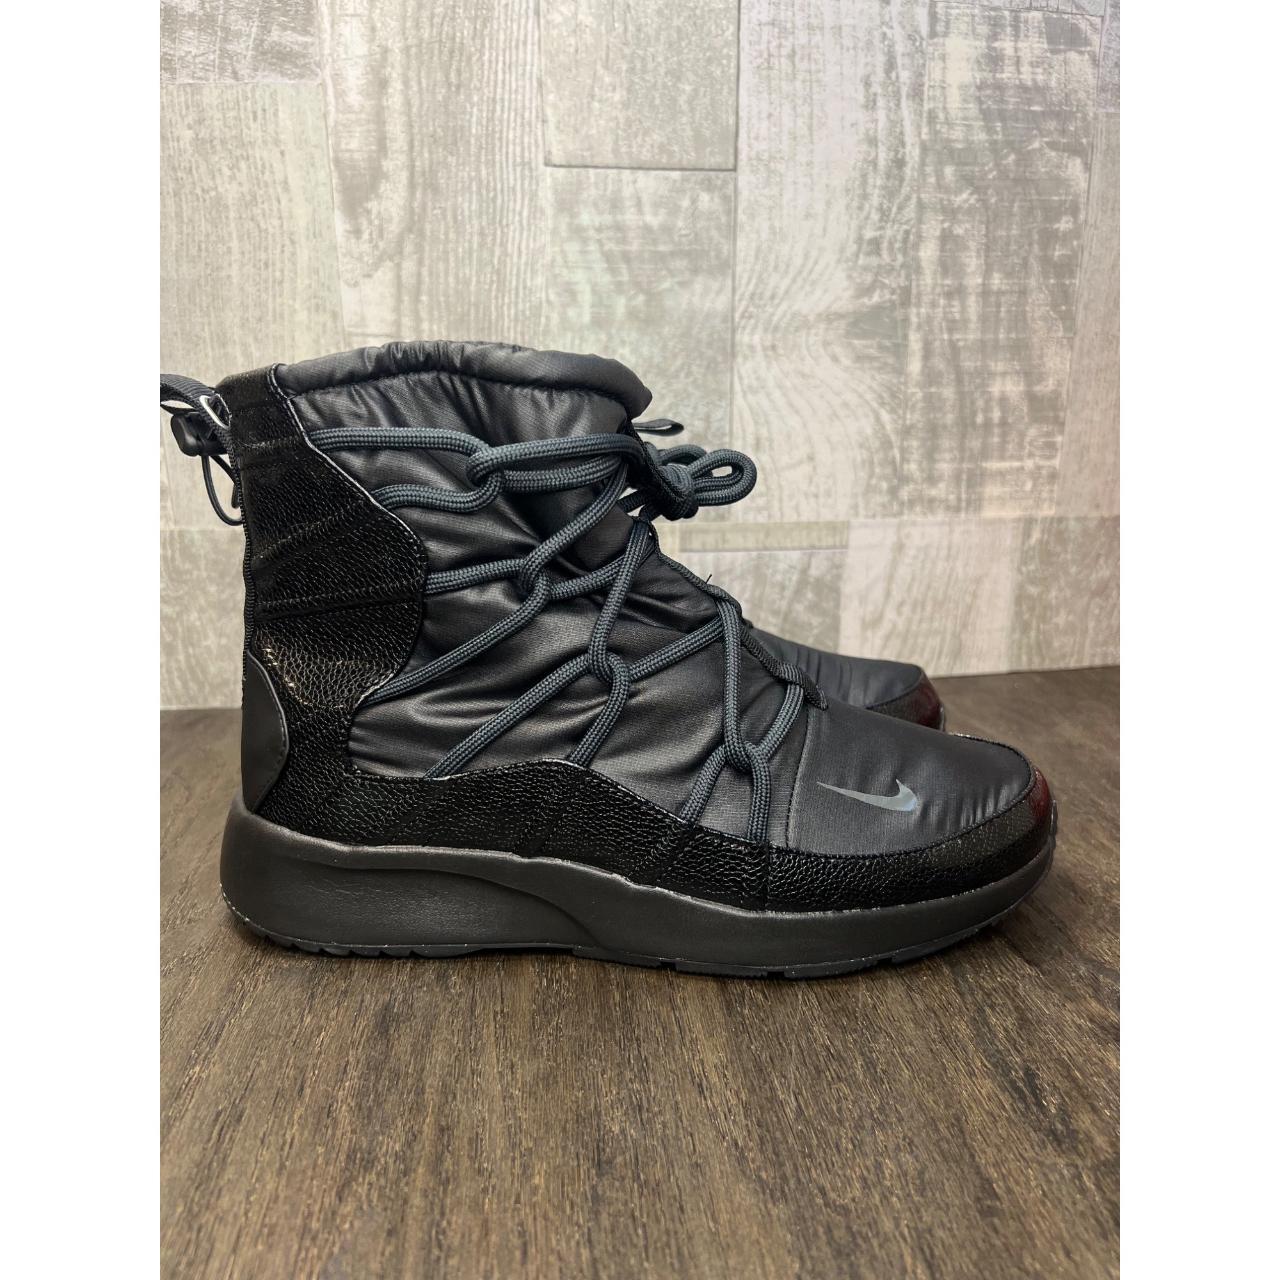 Nike Tanjun High Rise Boots Black Anthracite Size:... - Depop